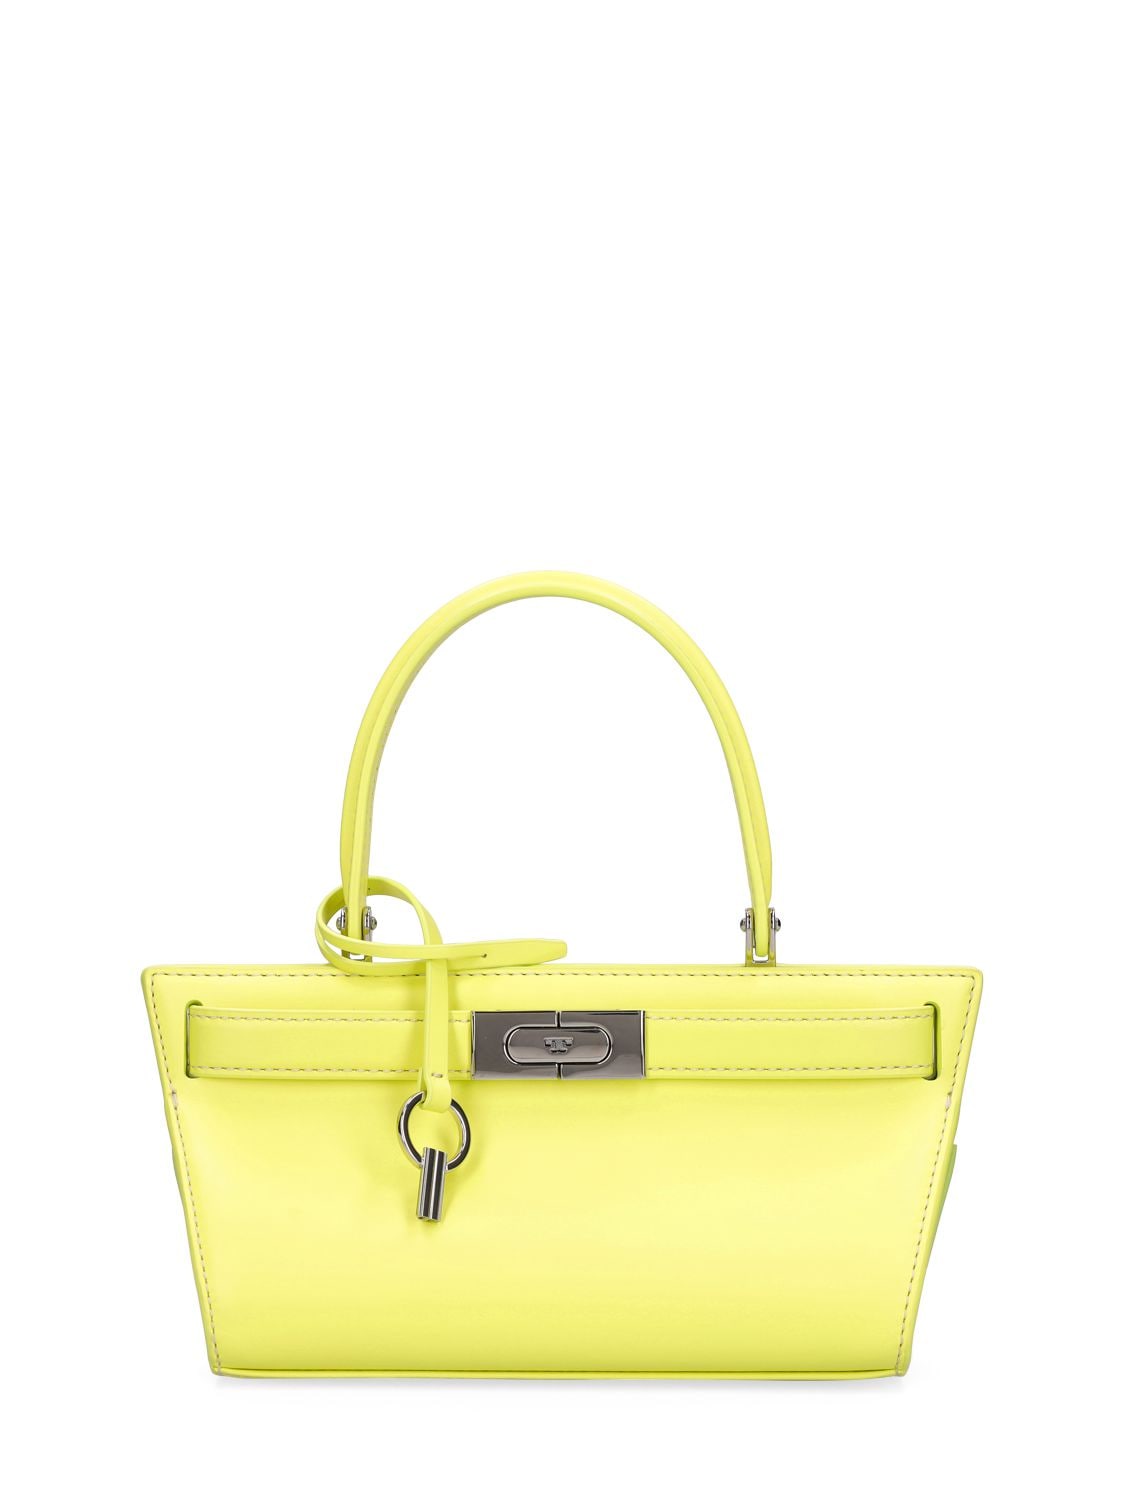 Tory Burch Petite Lee Radziwill Leather Bag In Blazing Yellow